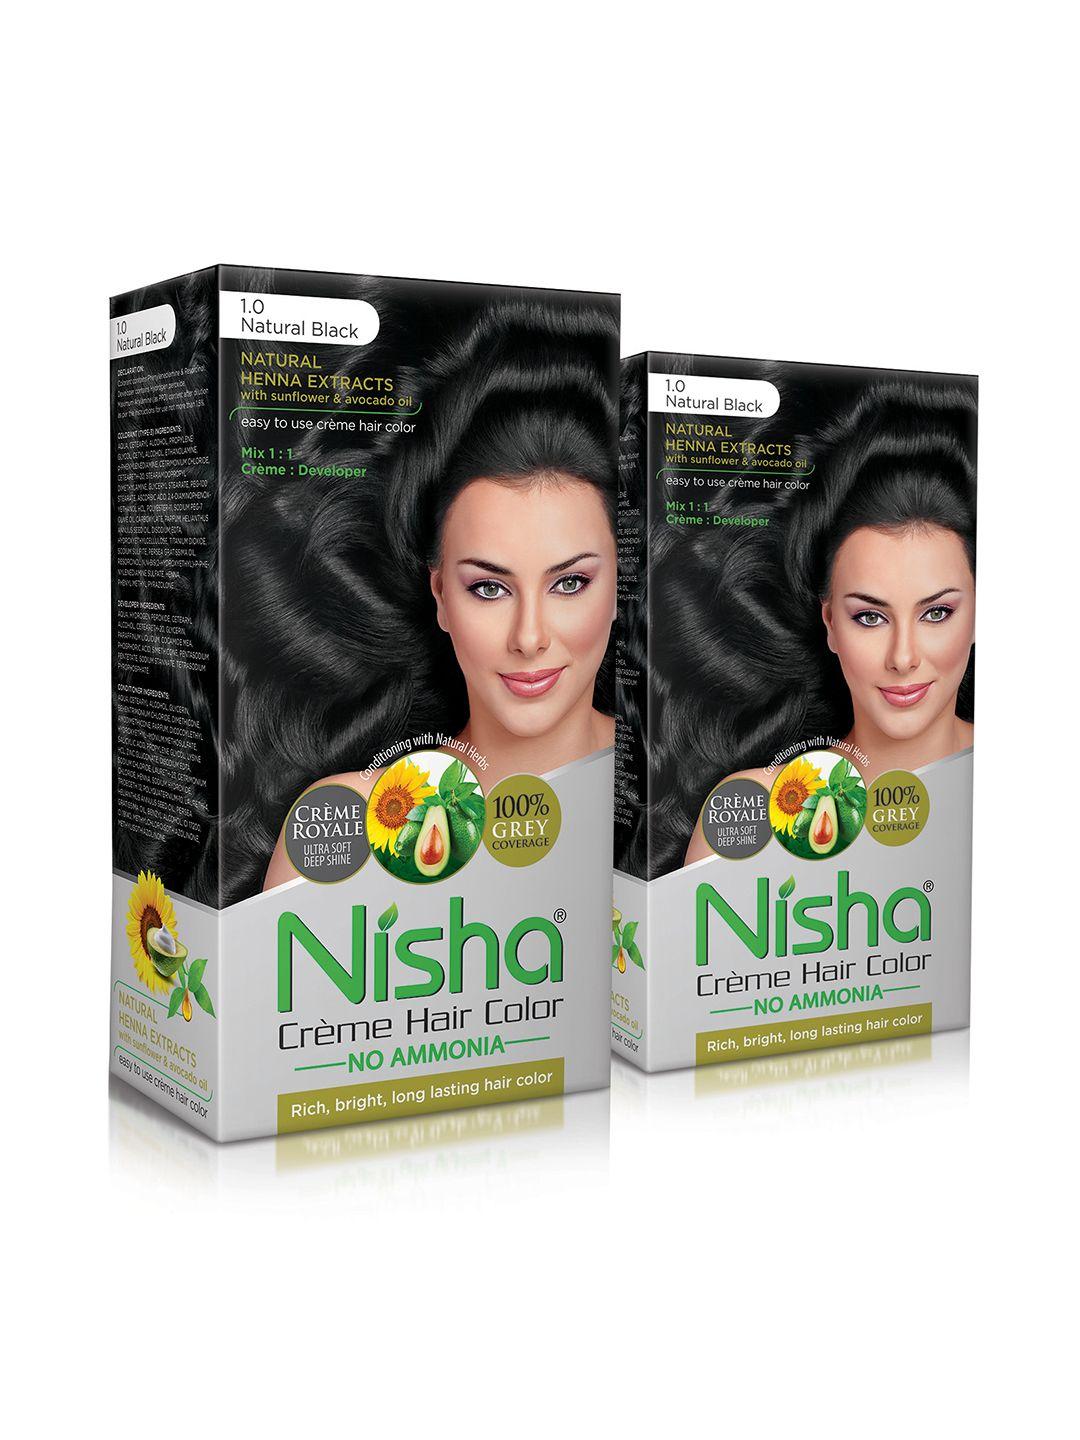 nisha set of 2 creme hair color 120gm each- natural black